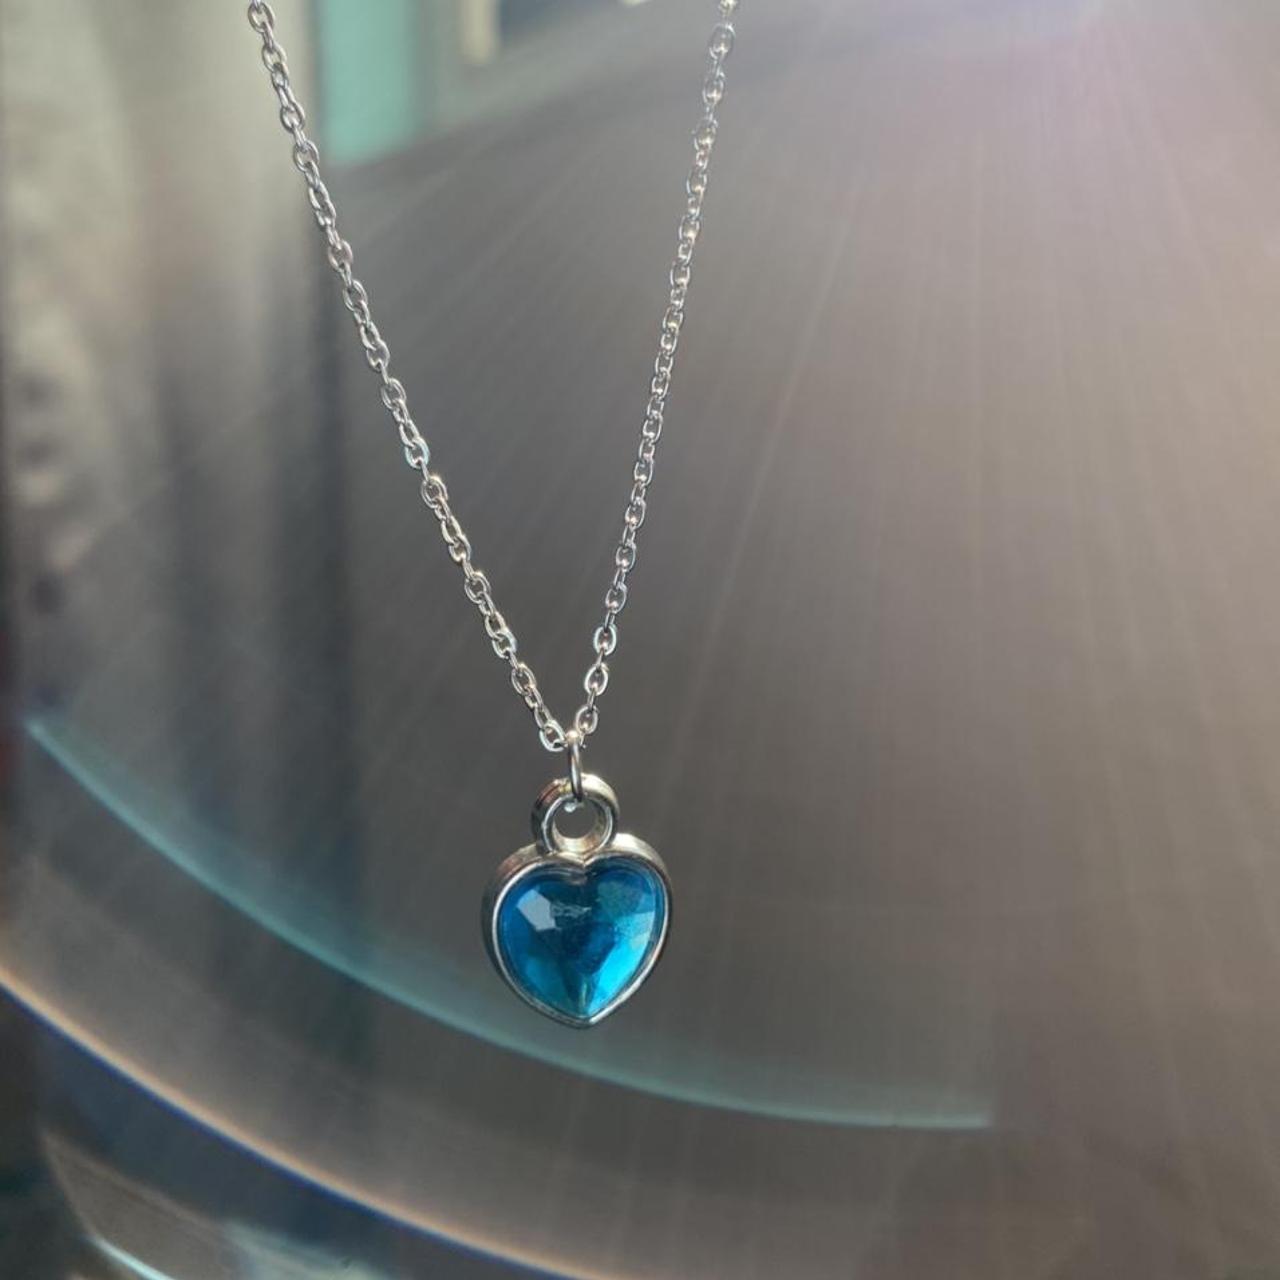 Product Image 1 - Handmade baby blue heart cz